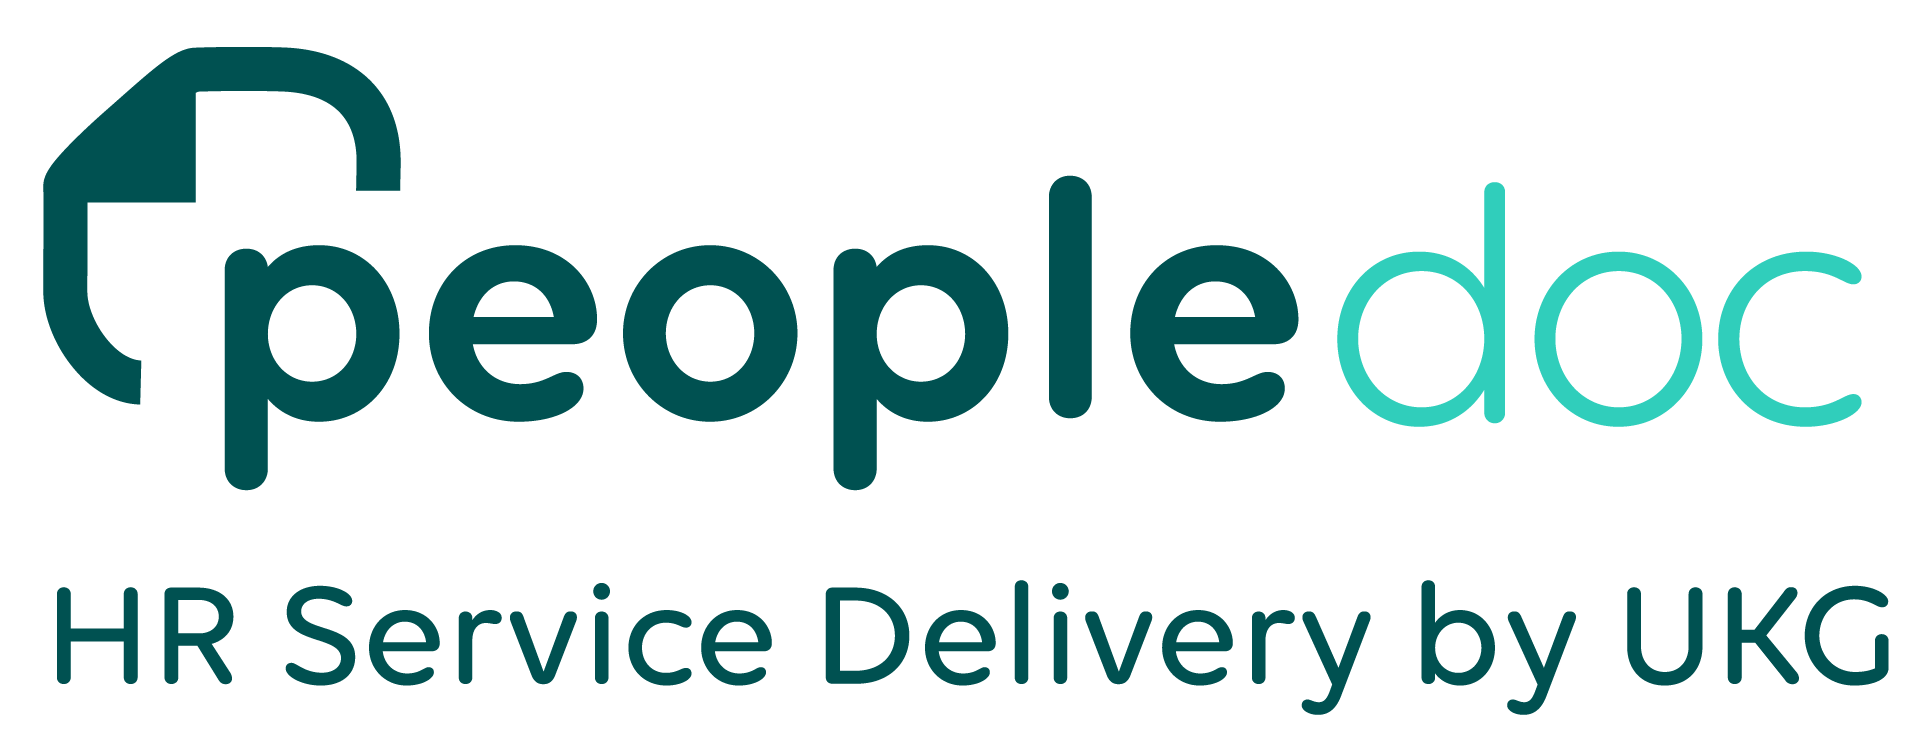 PeopleDoc-logo-rgb-1